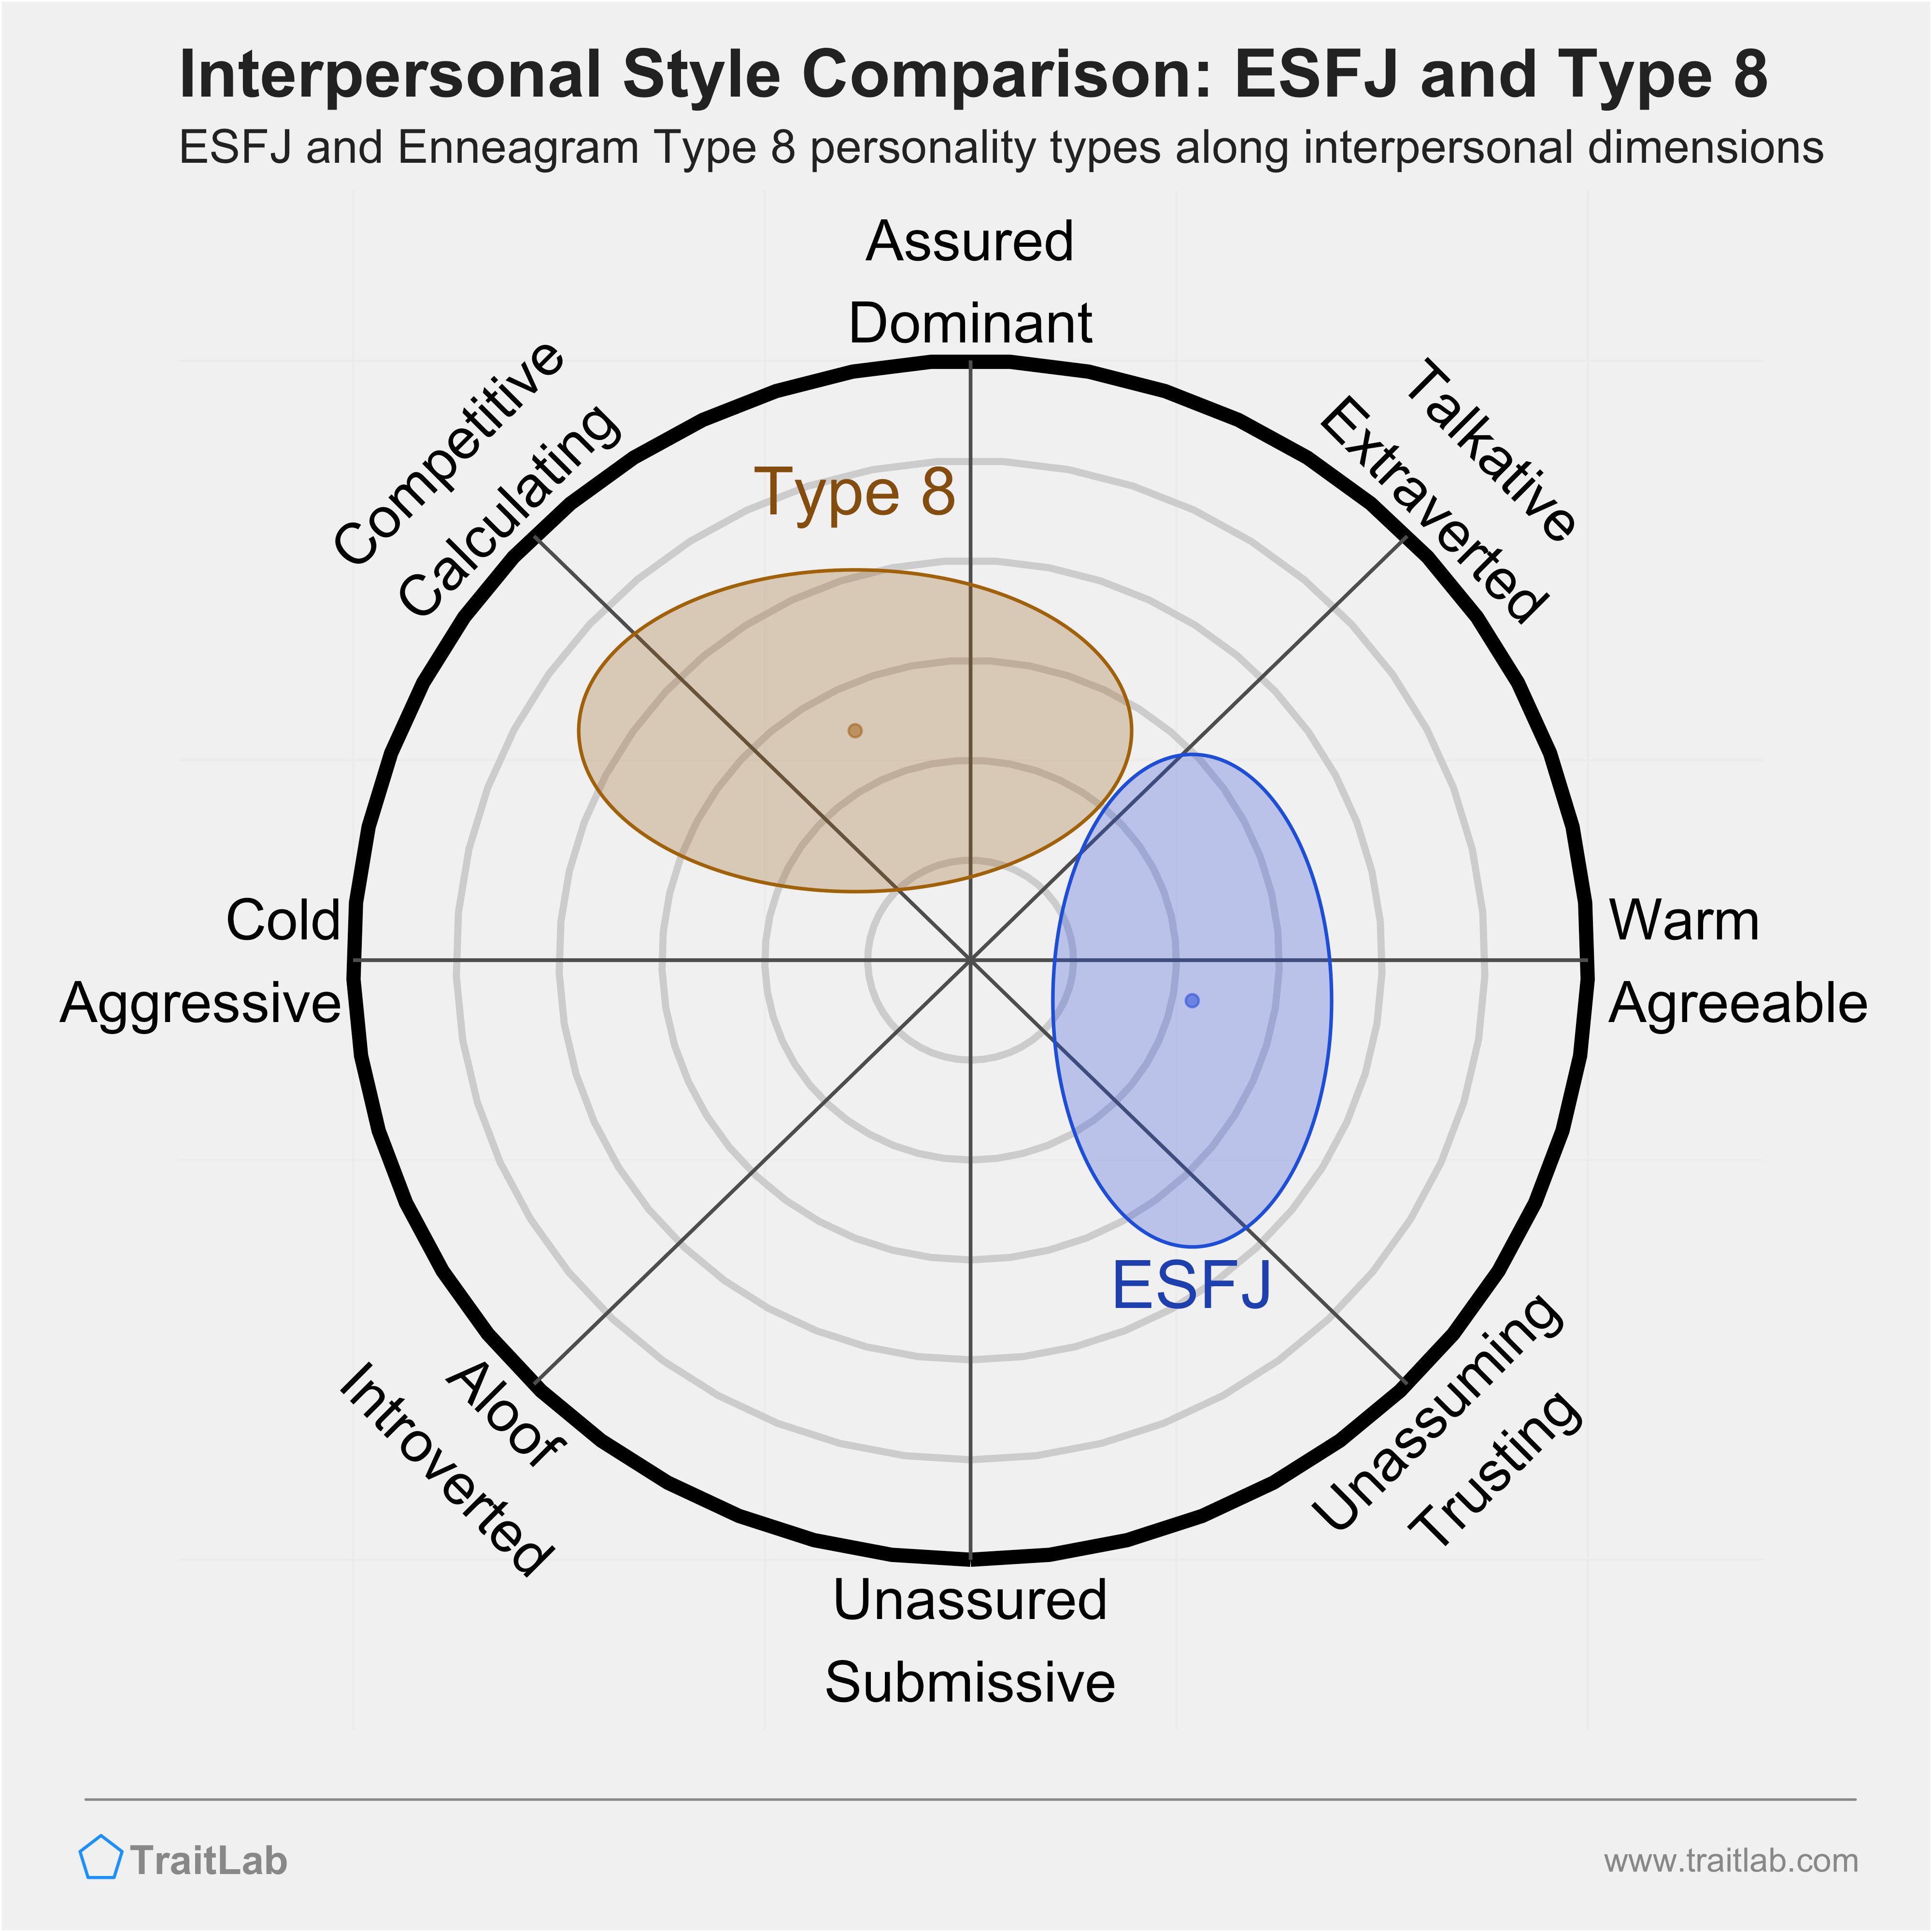 Enneagram ESFJ and Type 8 comparison across interpersonal dimensions